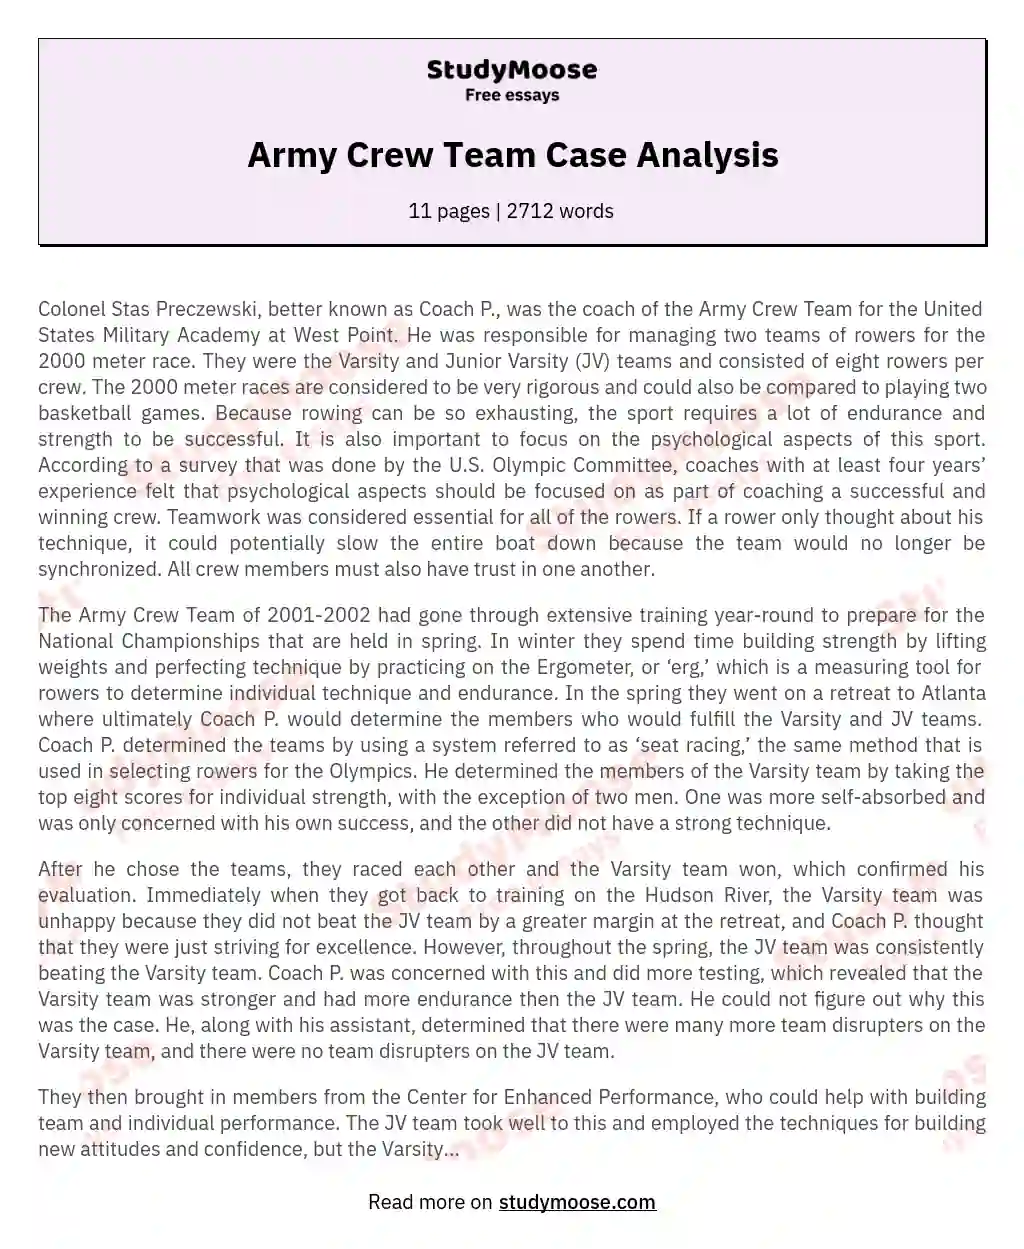 Army Crew Team Case Analysis essay